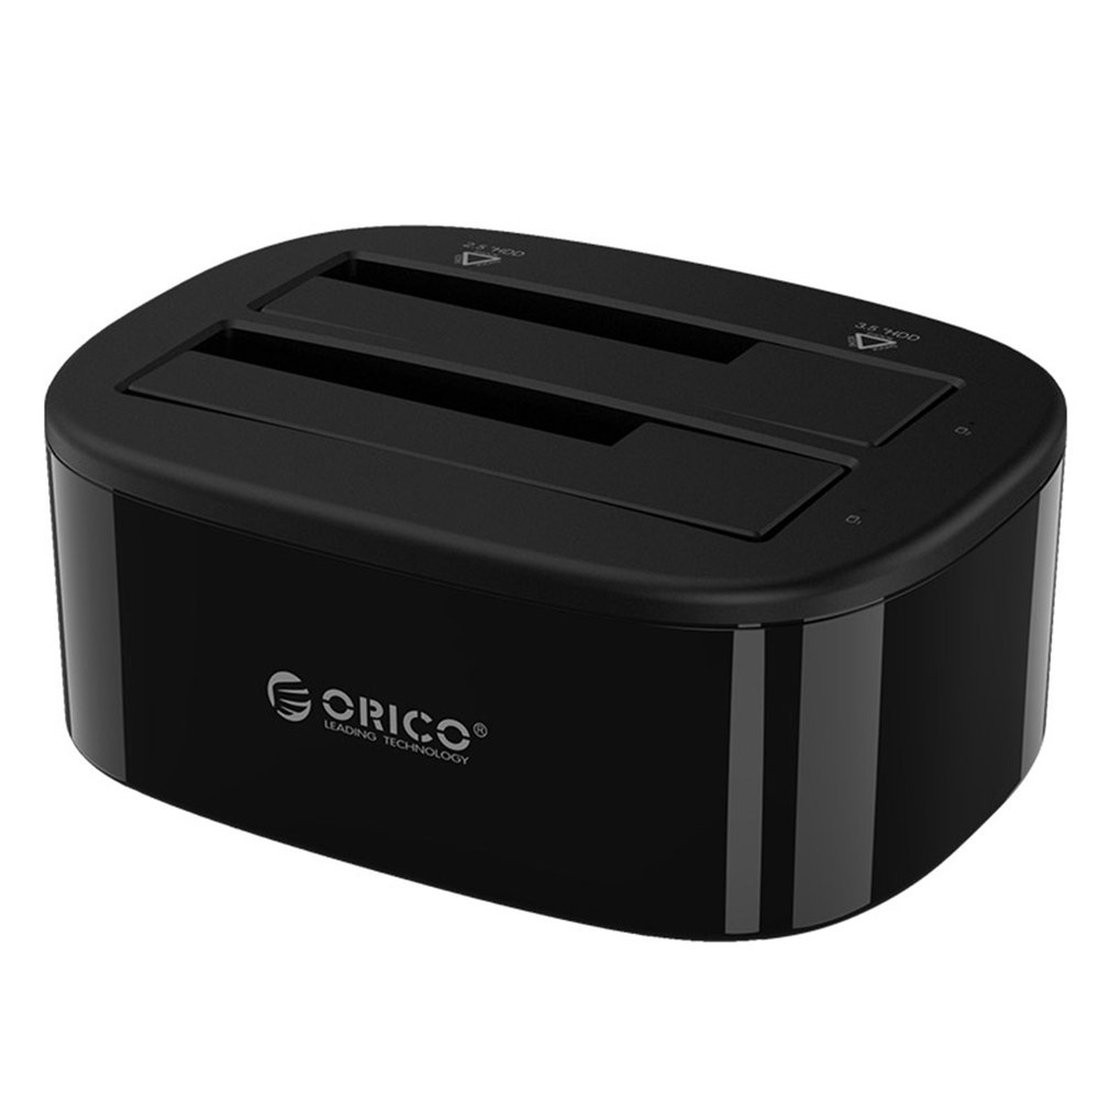 ORICO Ổ Cứng 99orico 6228us3-bk Cổng Usb 3.0 2.5 / 3.5 Inch